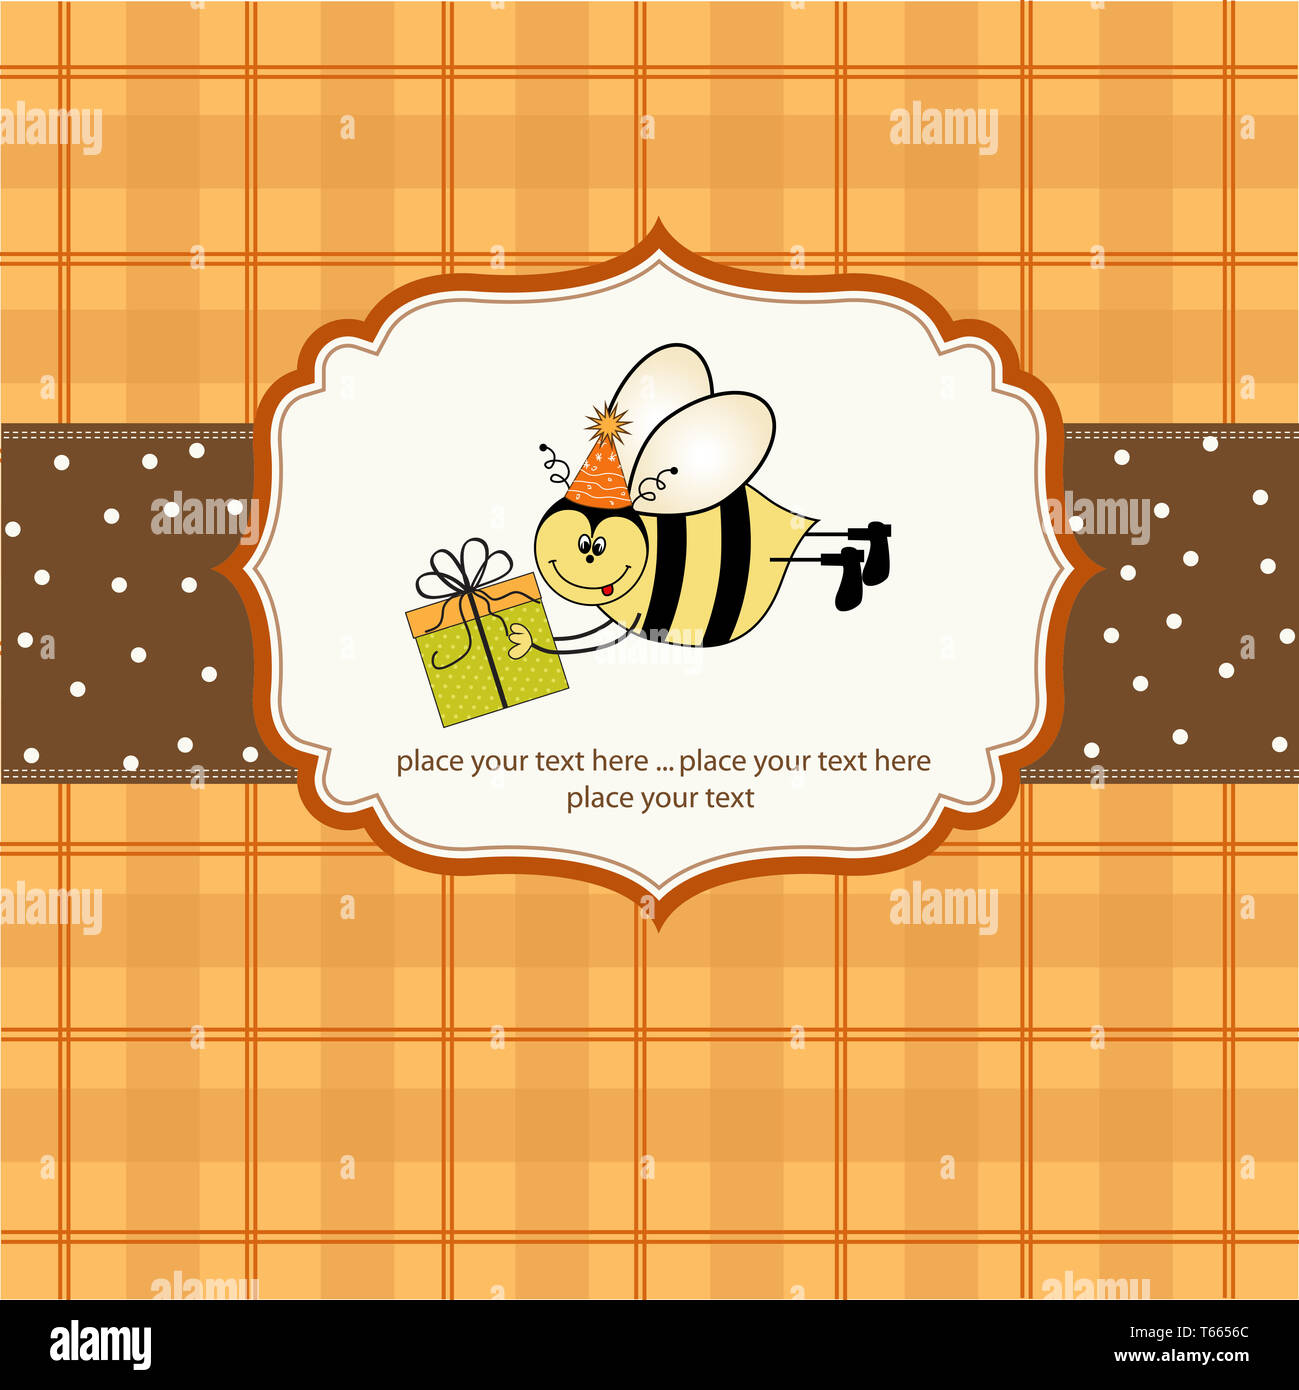 Geburtstagskarte mit Biene Stockfoto